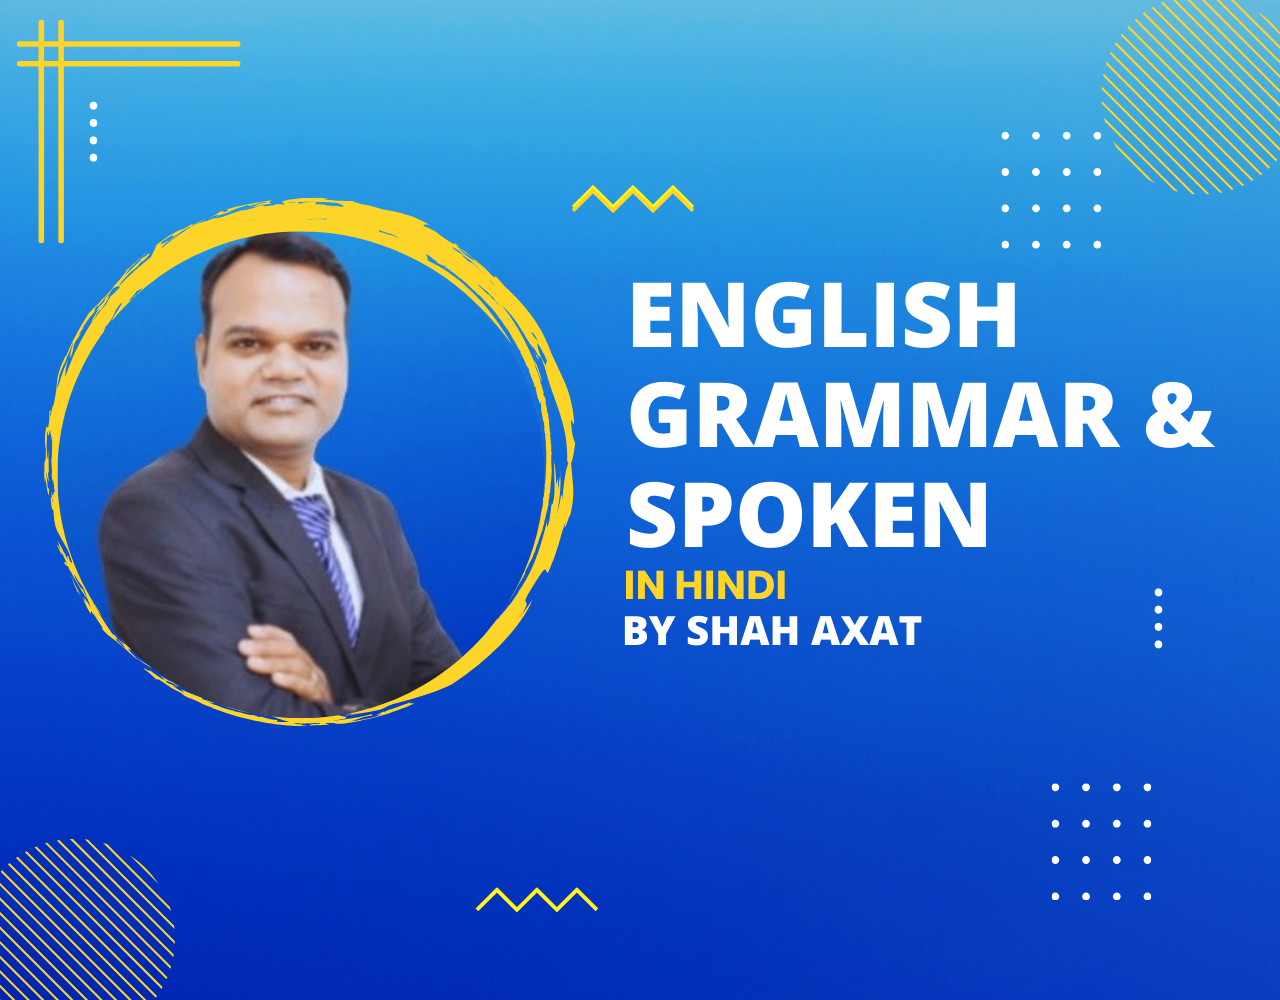 English grammar & spoken